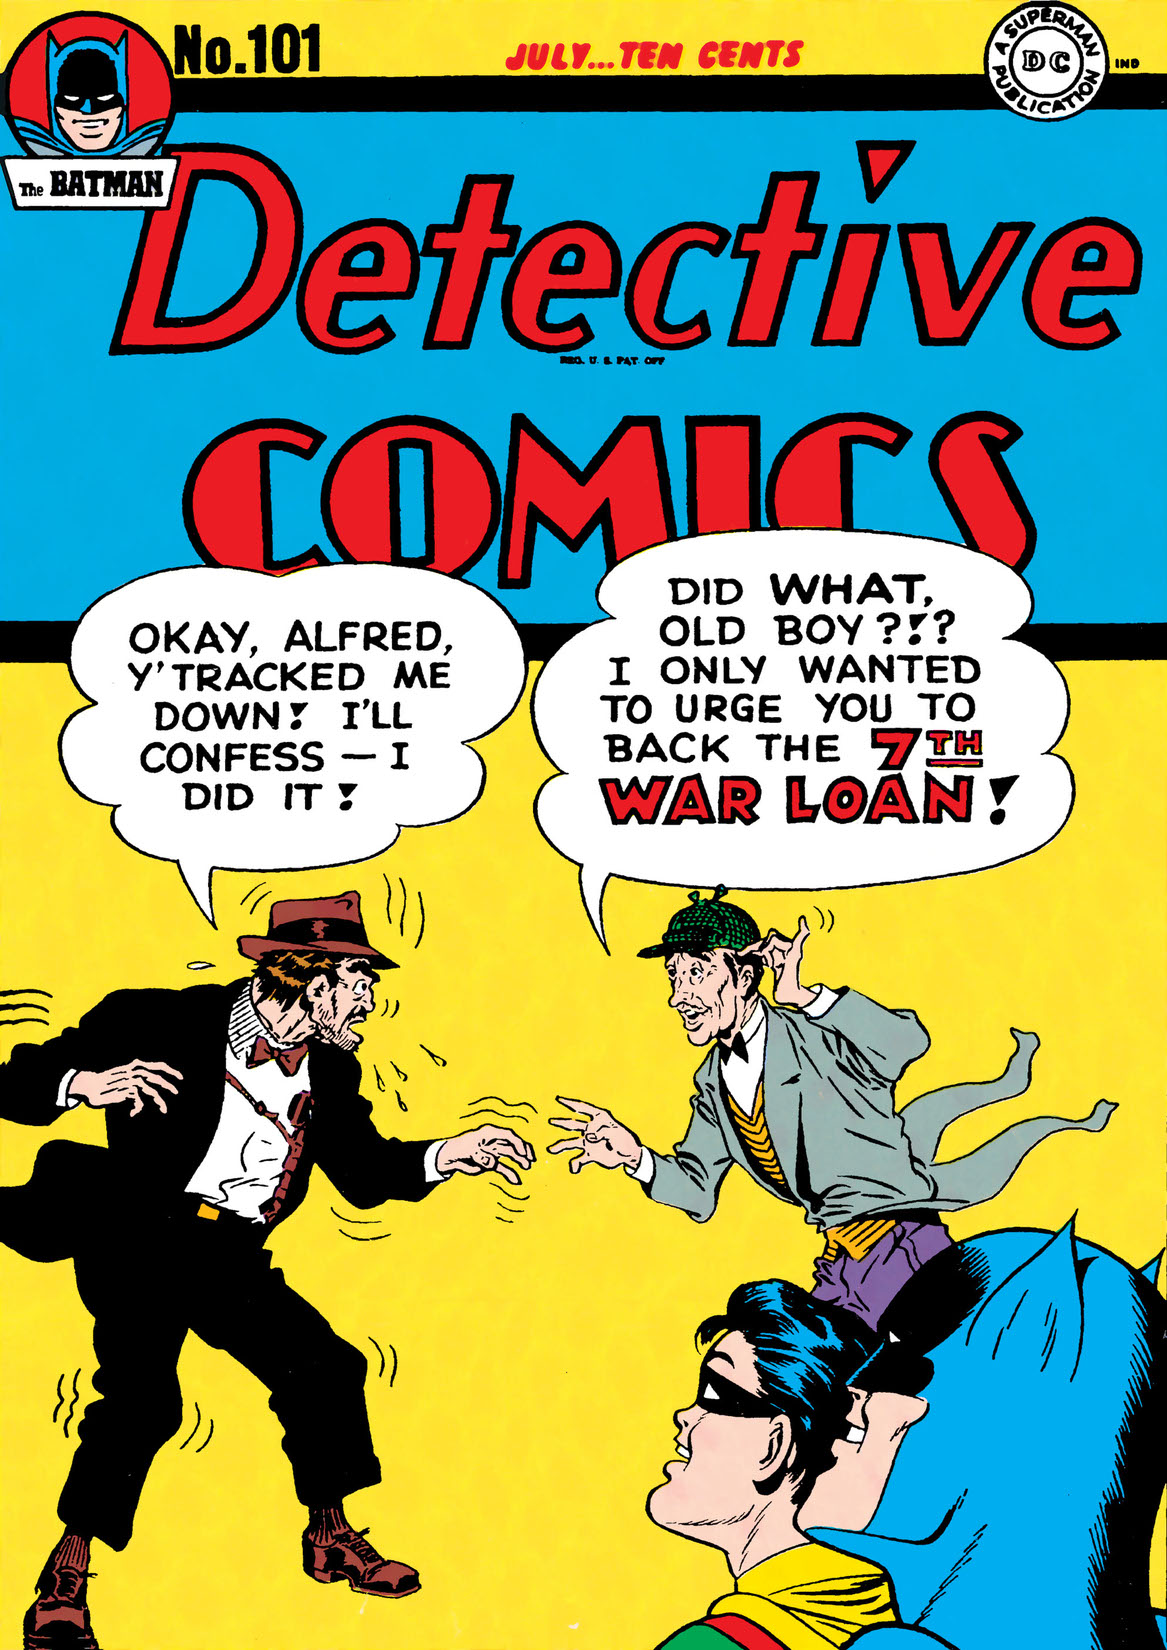 Detective Comics (1937-) #101 preview images